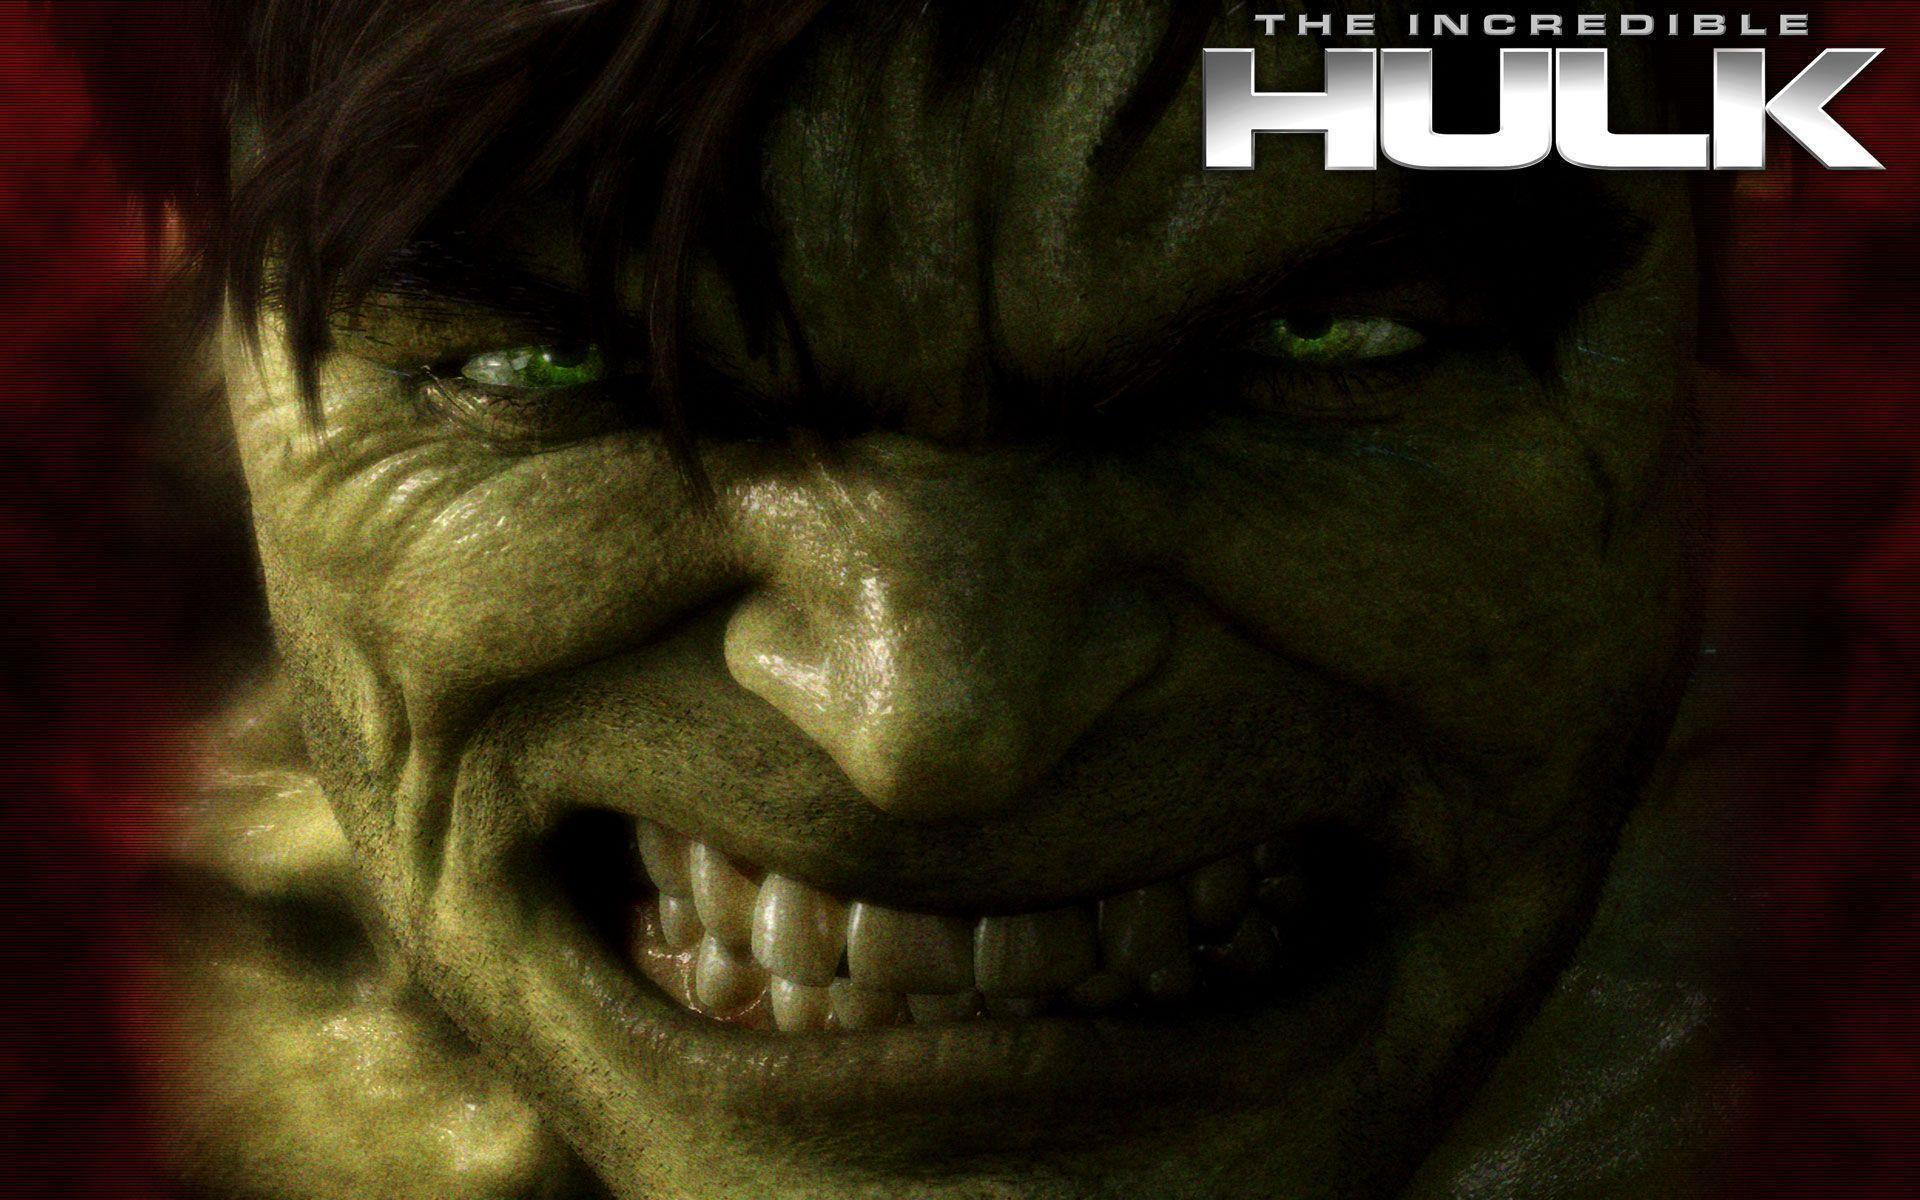 Incredible Hulk Wallpaper Movie Photo Hulk Wallpaper Hulk